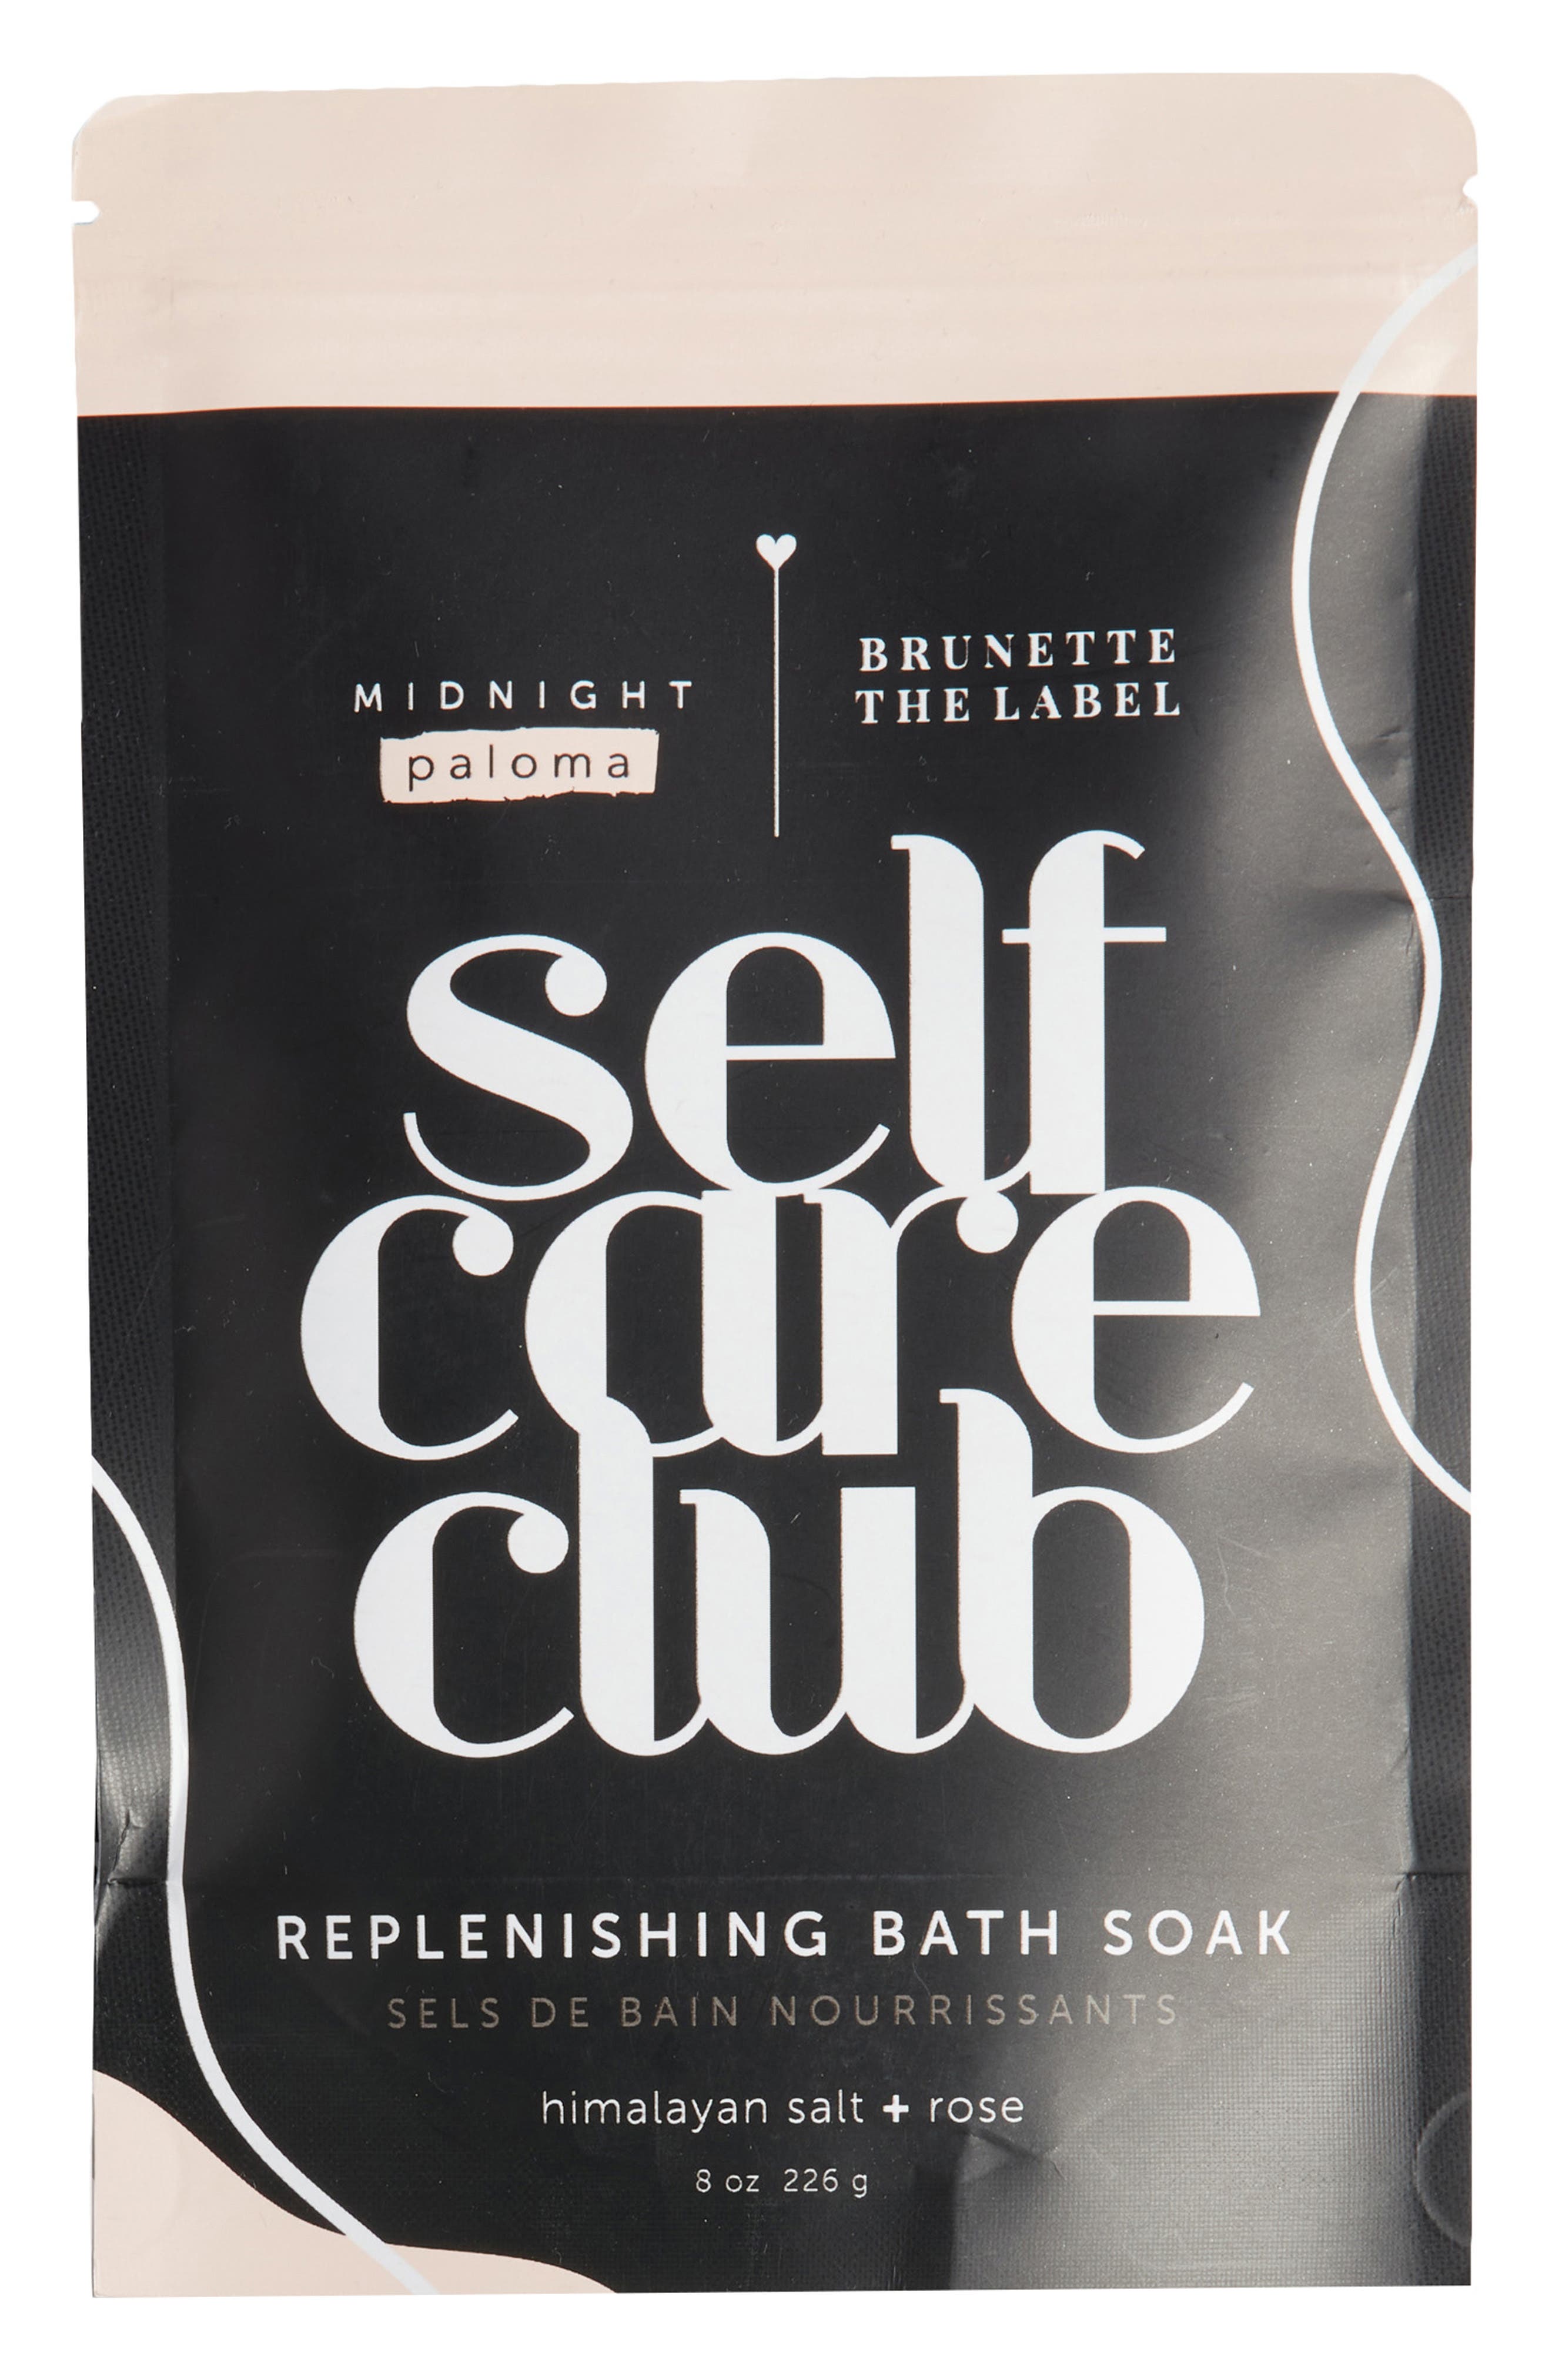 MIDNIGHT PALOMA x BRUNETTE the Label Self Care Club Replenishing Bath Soak in None at Nordstrom